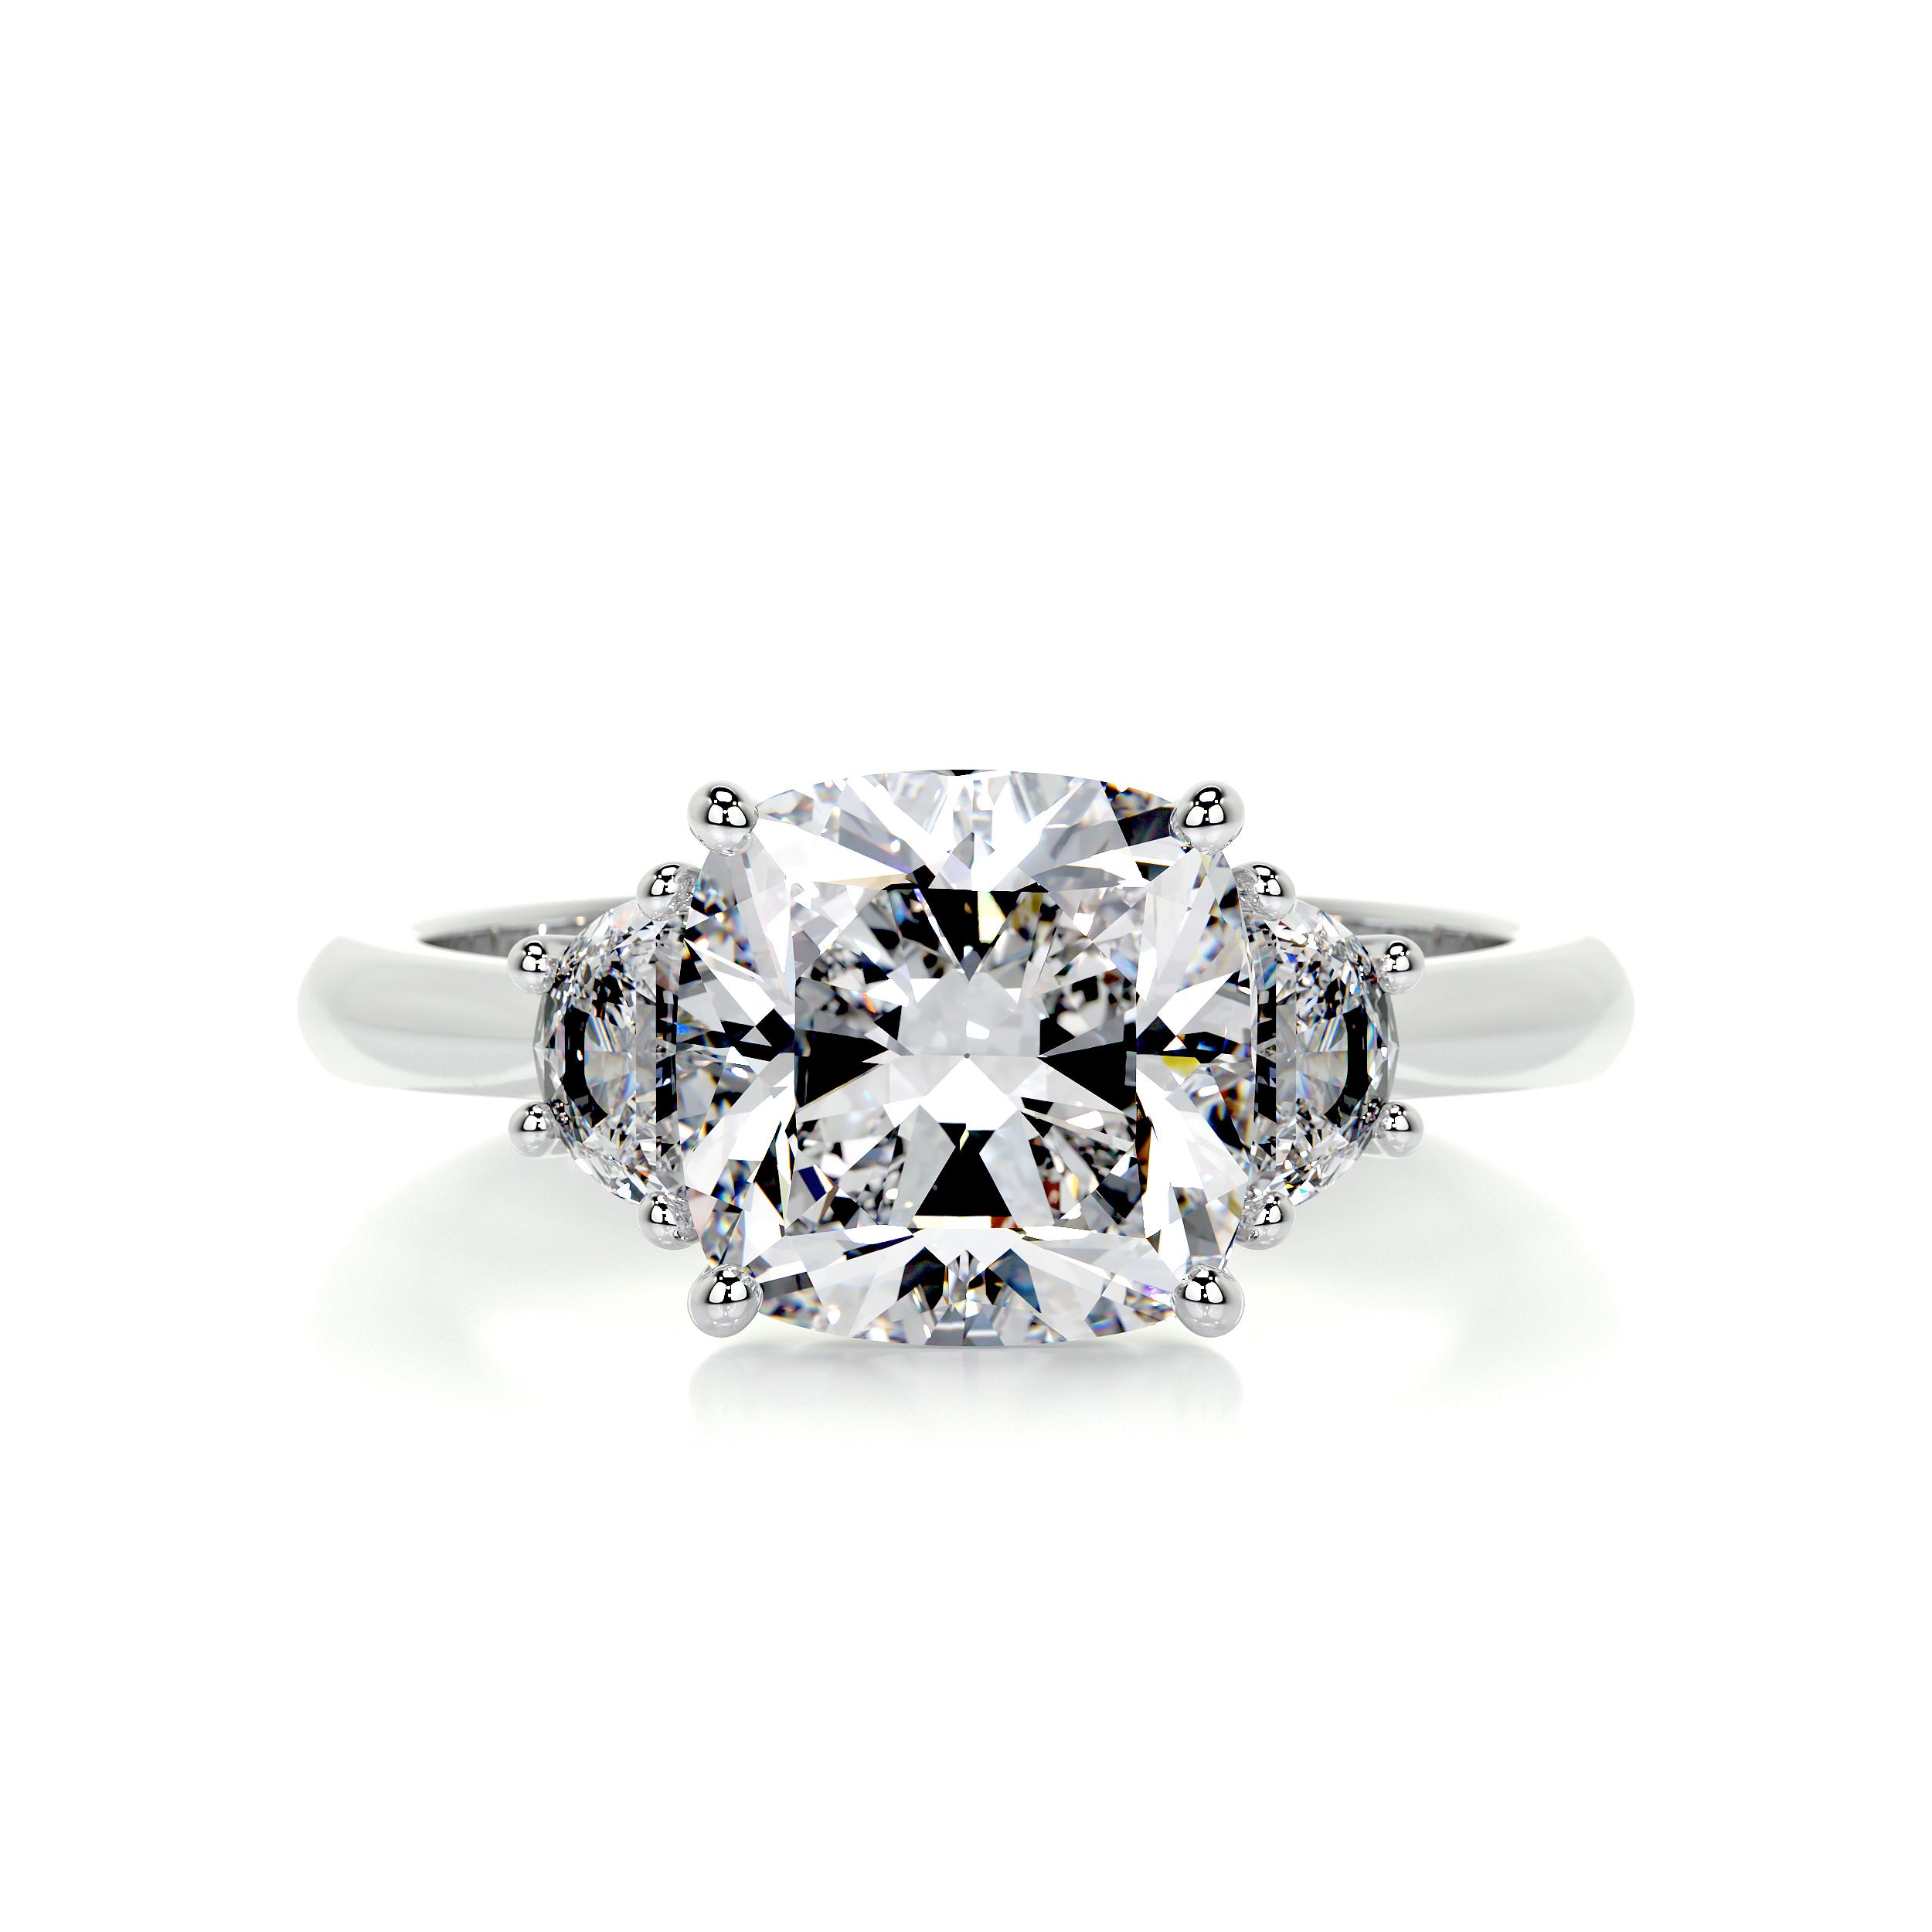 Whitney Diamond Engagement Ring   (3 Carat) -14K White Gold